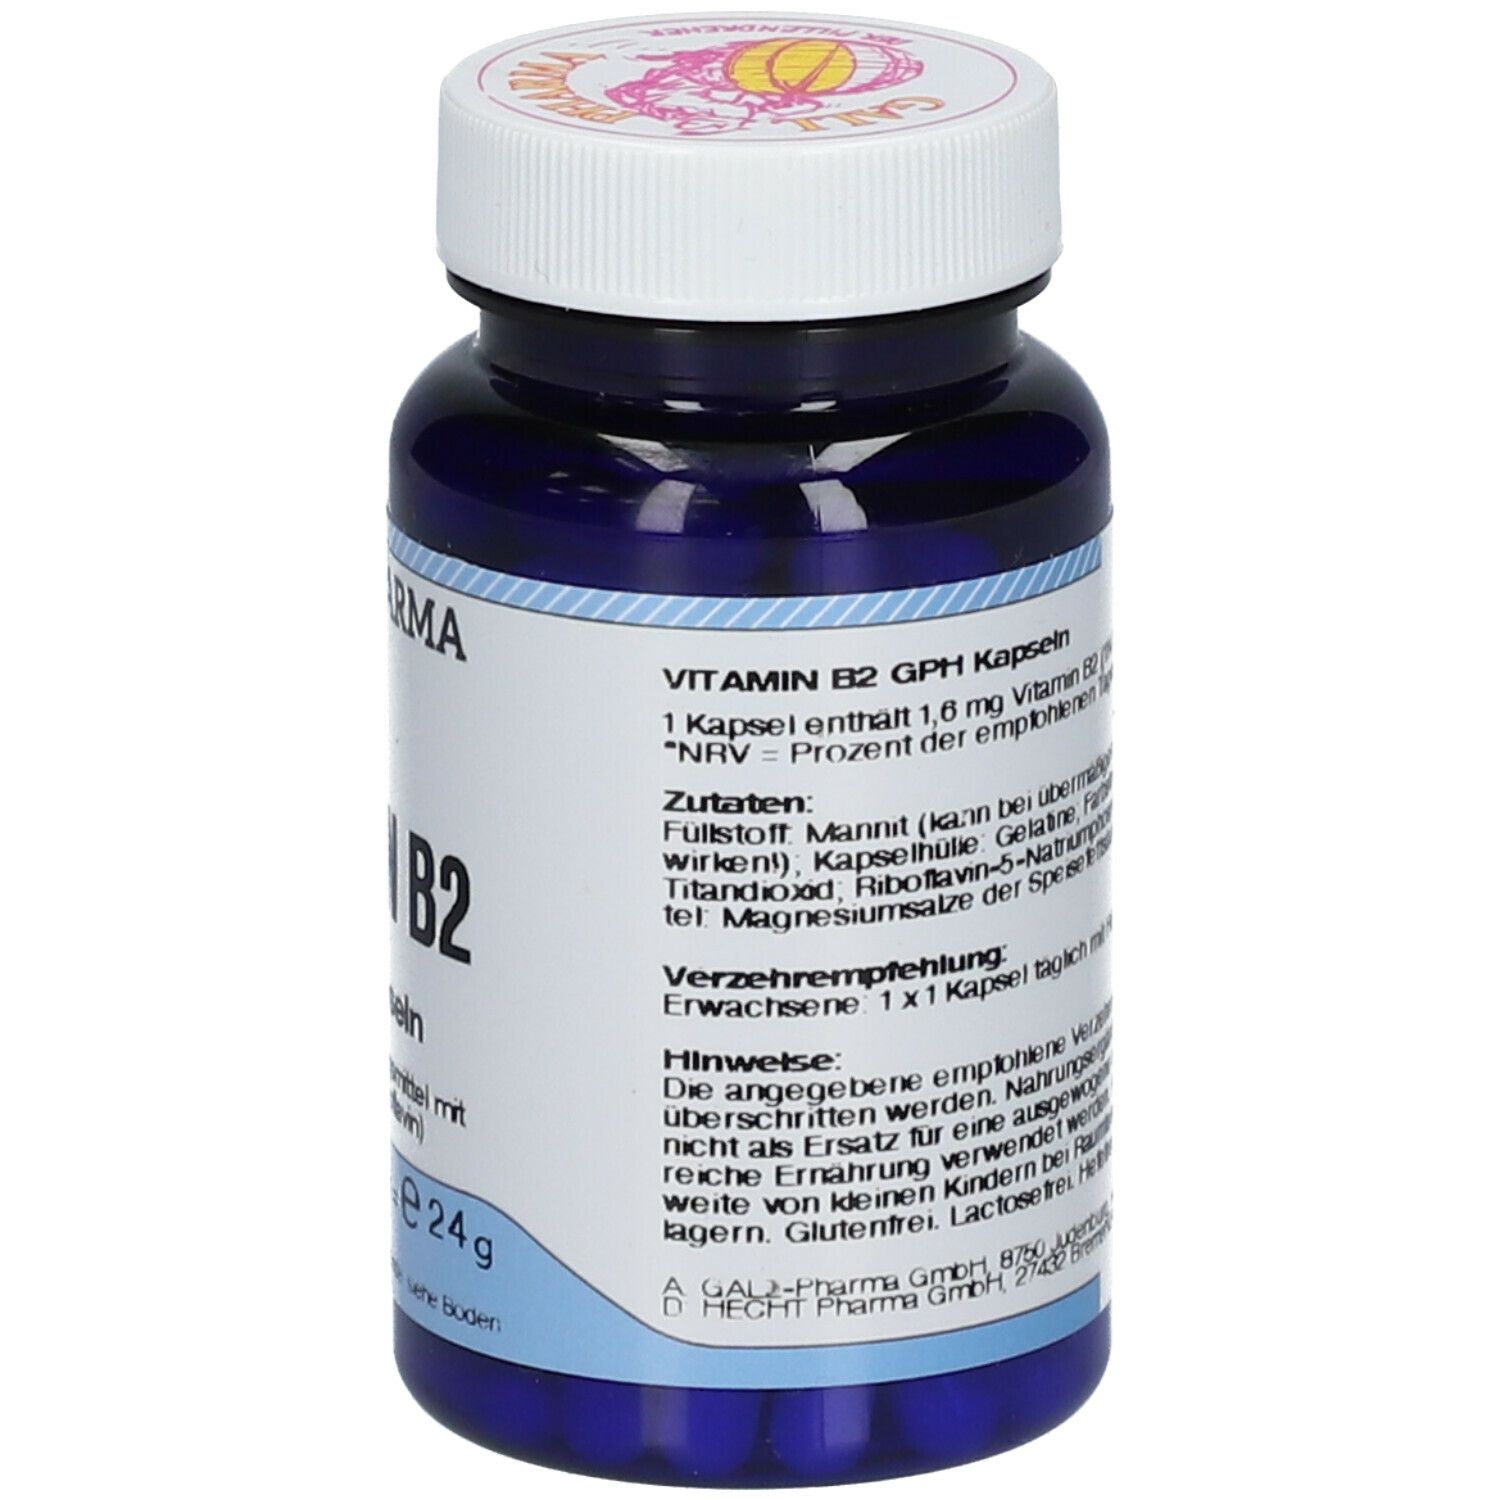 GALL PHARMA Vitamin B2 GPH